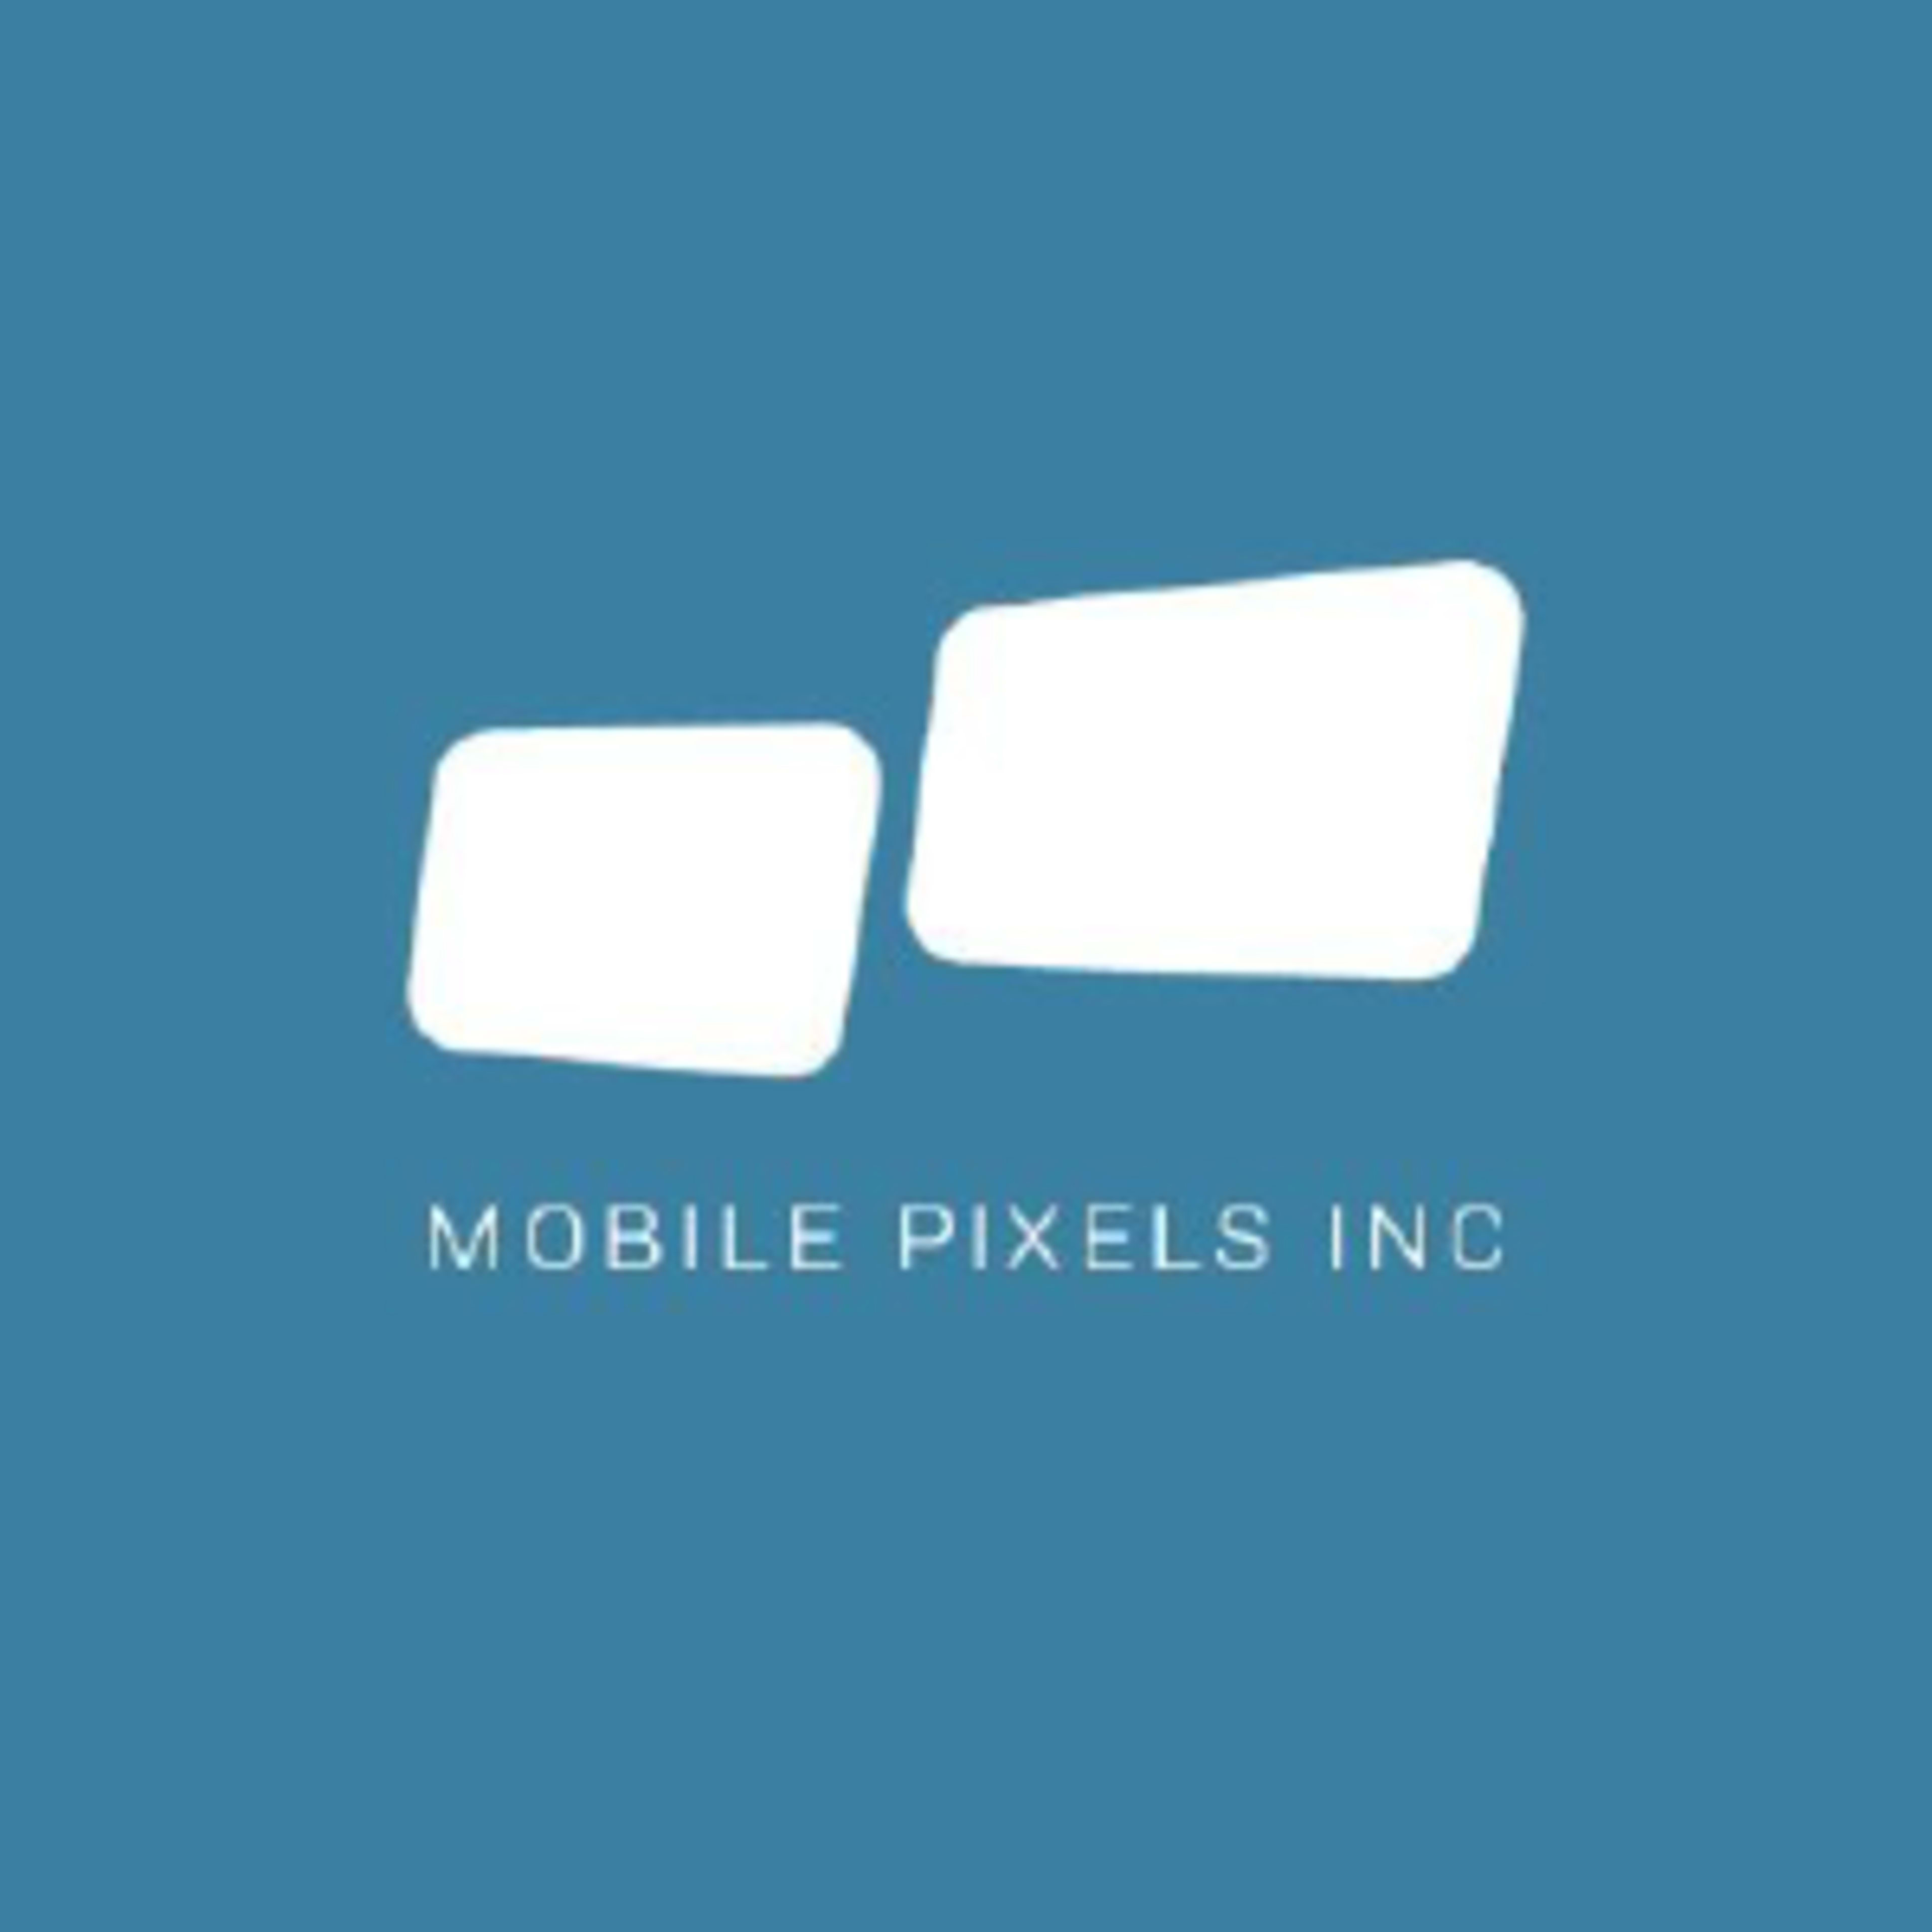 Mobile Pixels Code